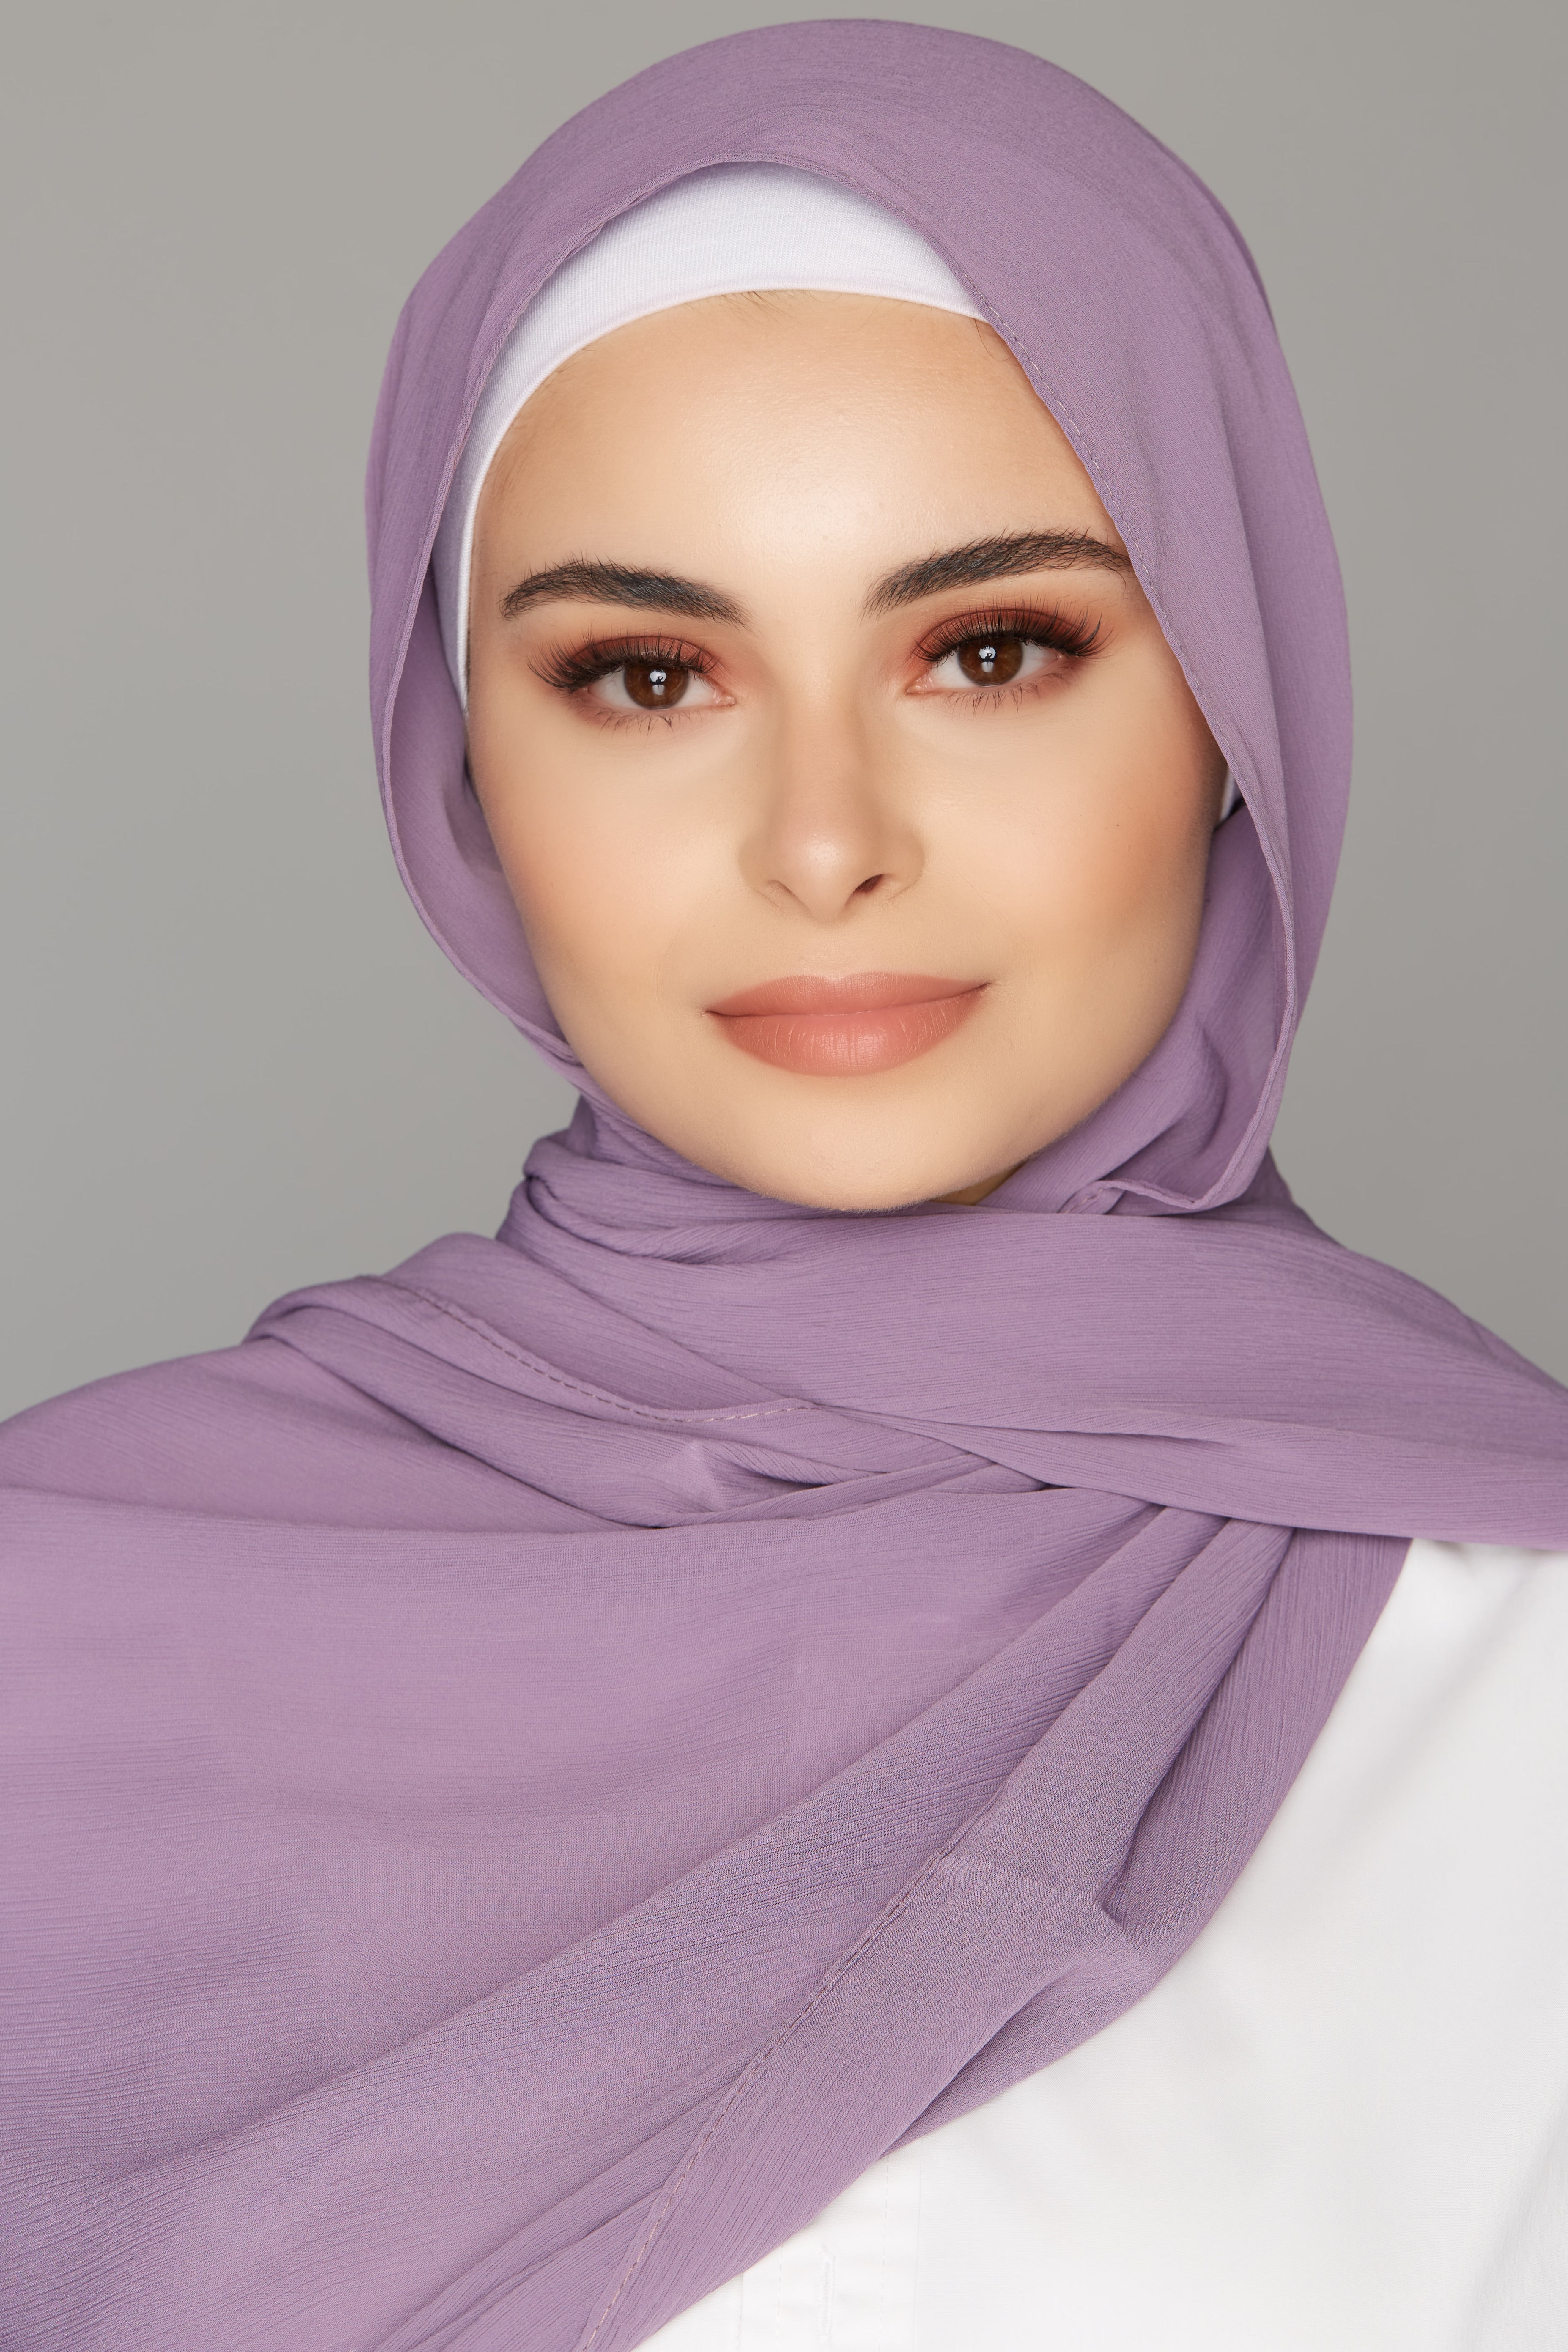 georgette chiffon hijab viola purple color